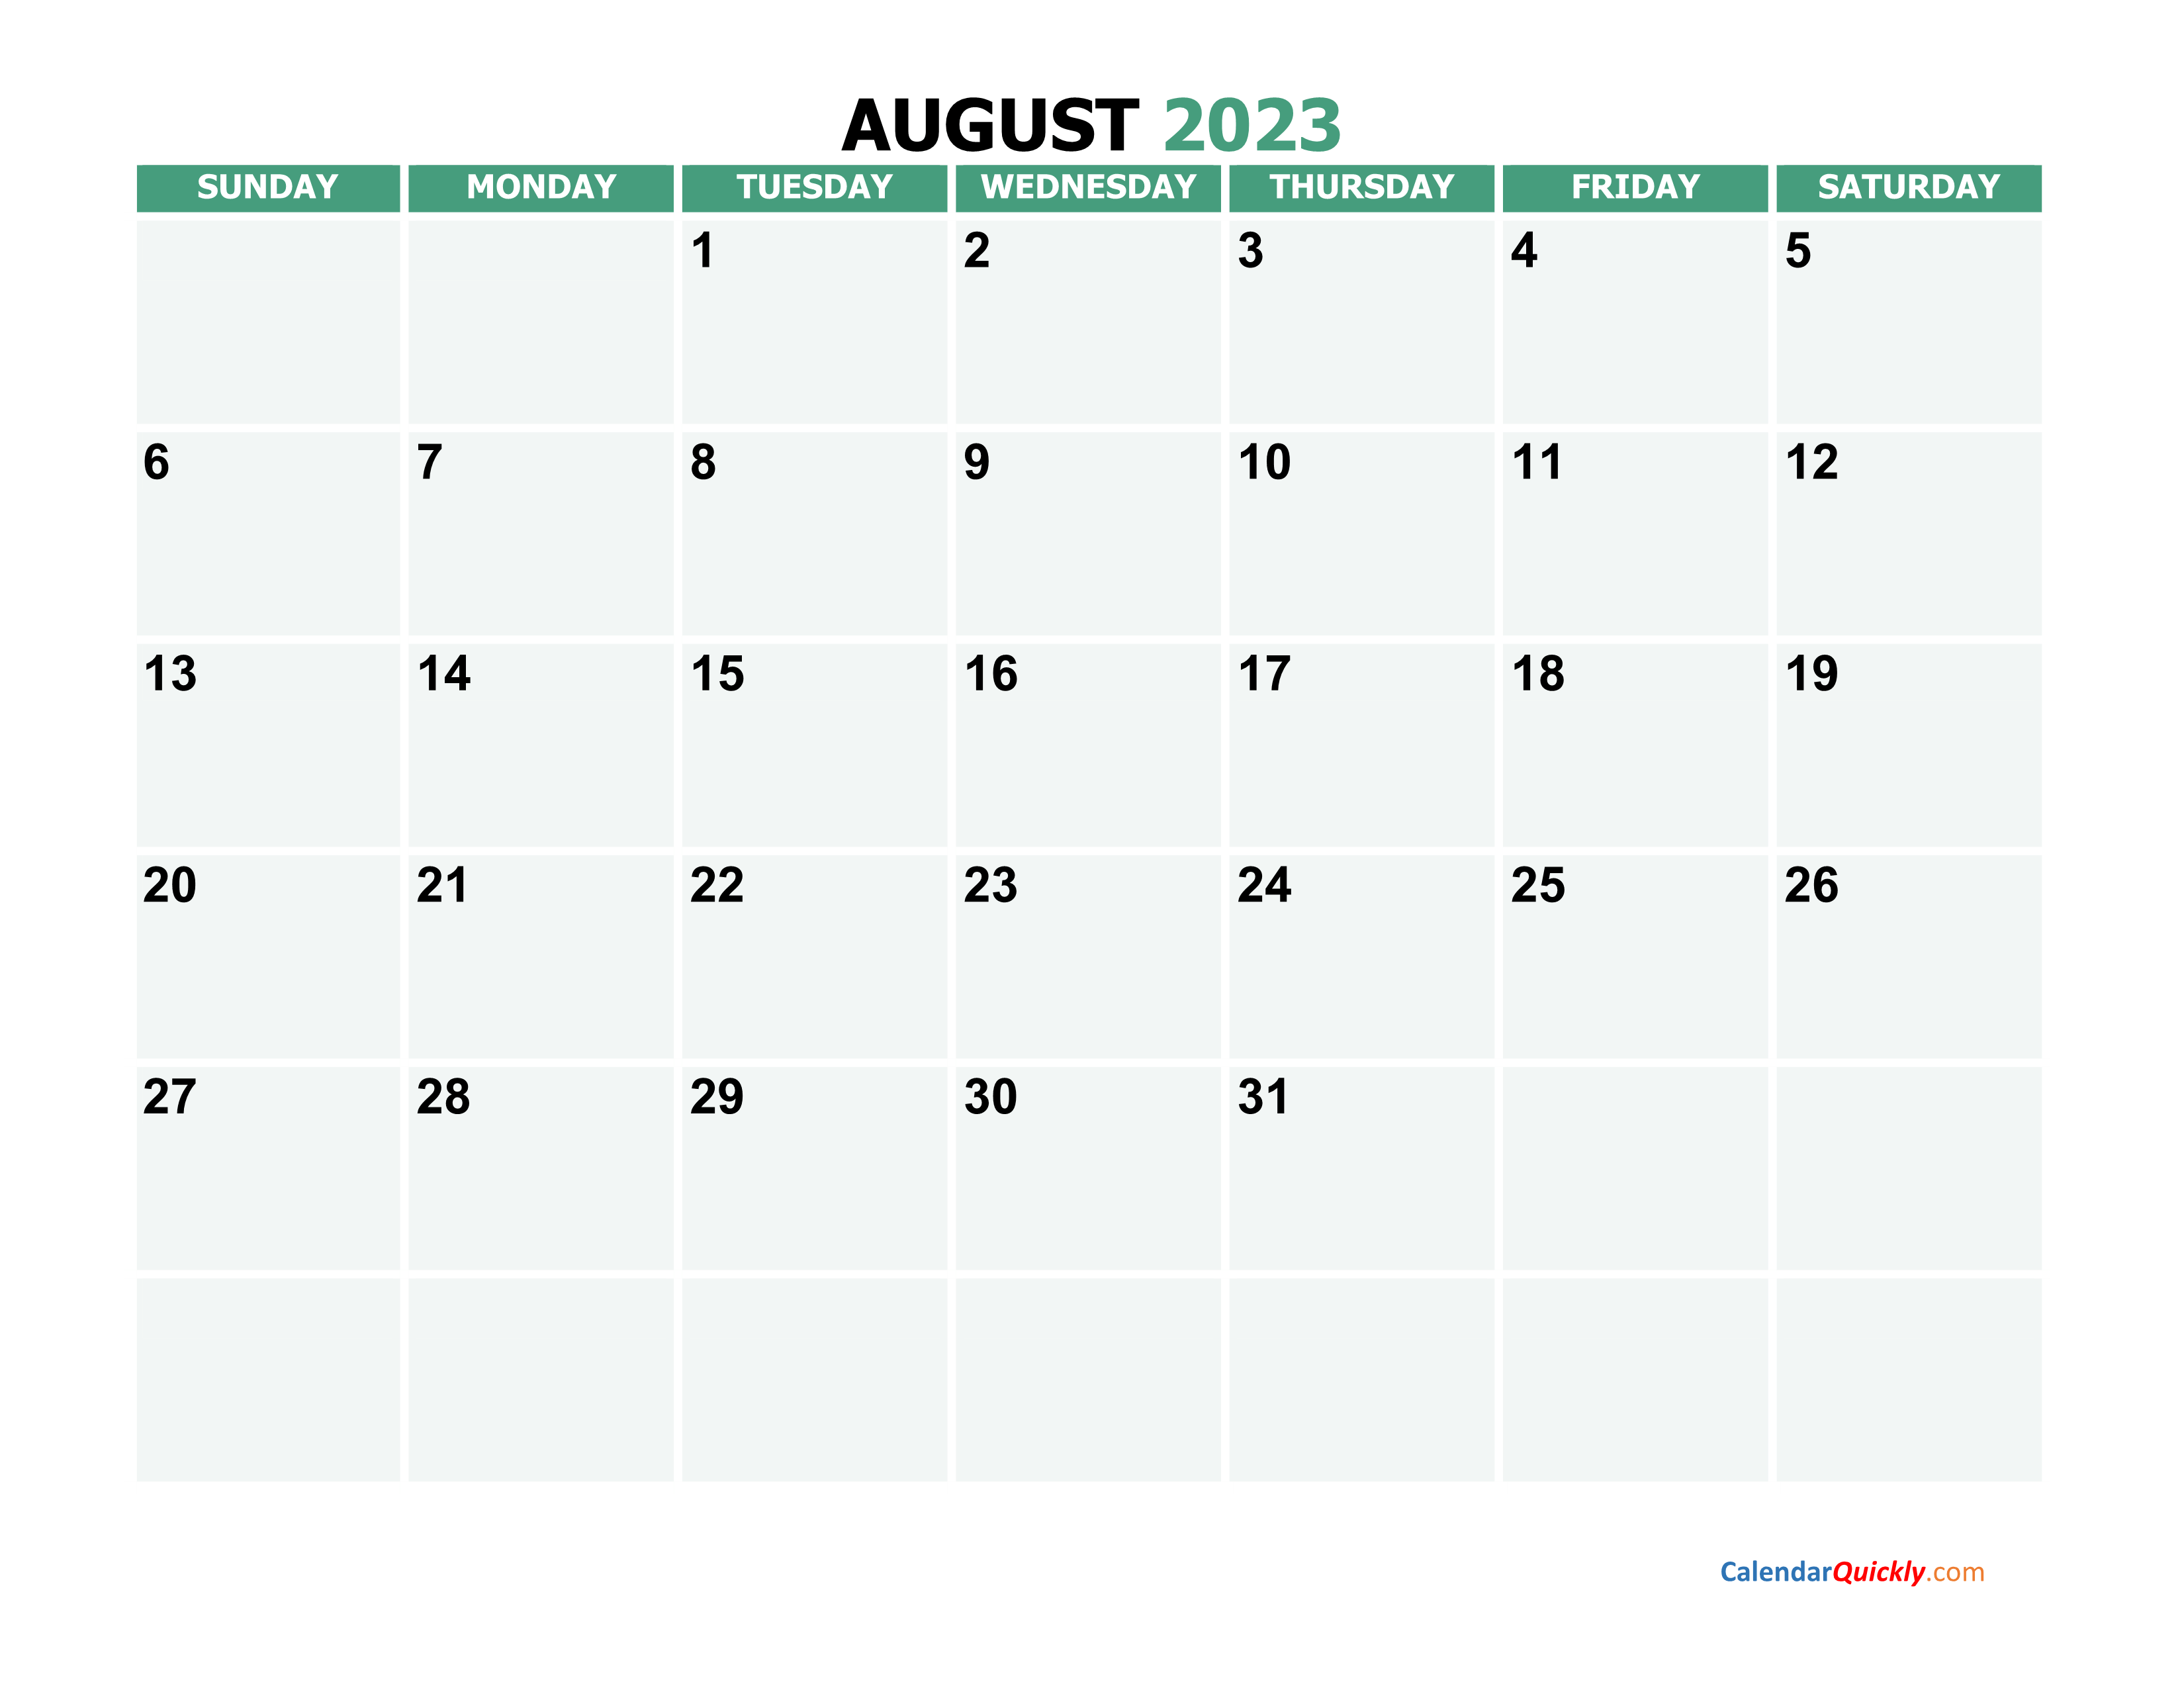 August 2023 Calendars Calendar Quickly